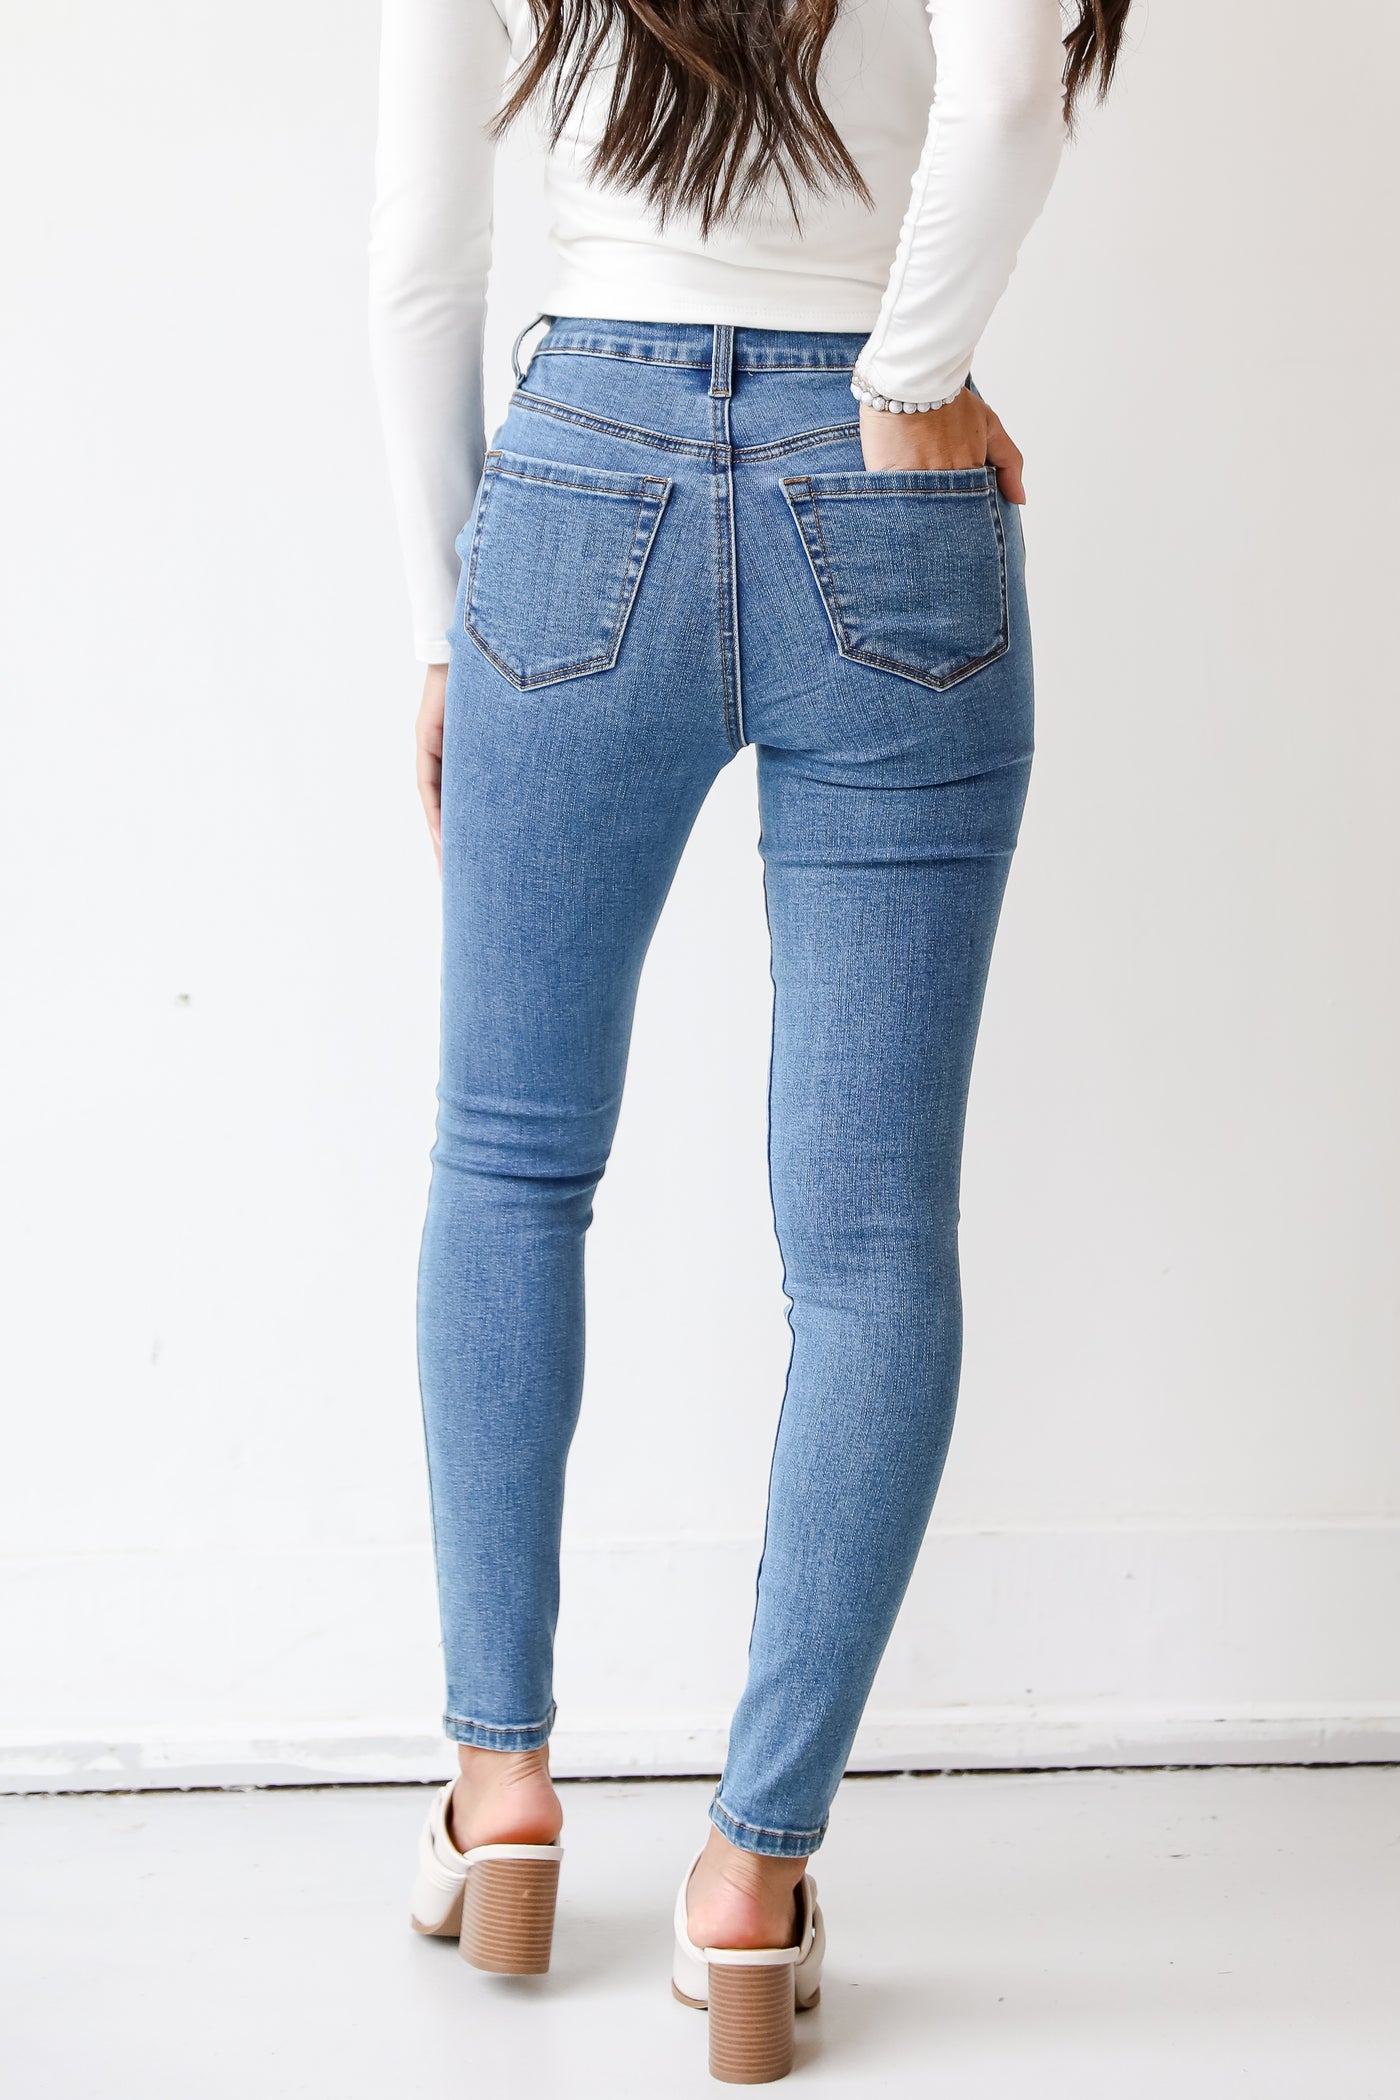 medium wash skinny jeans back view